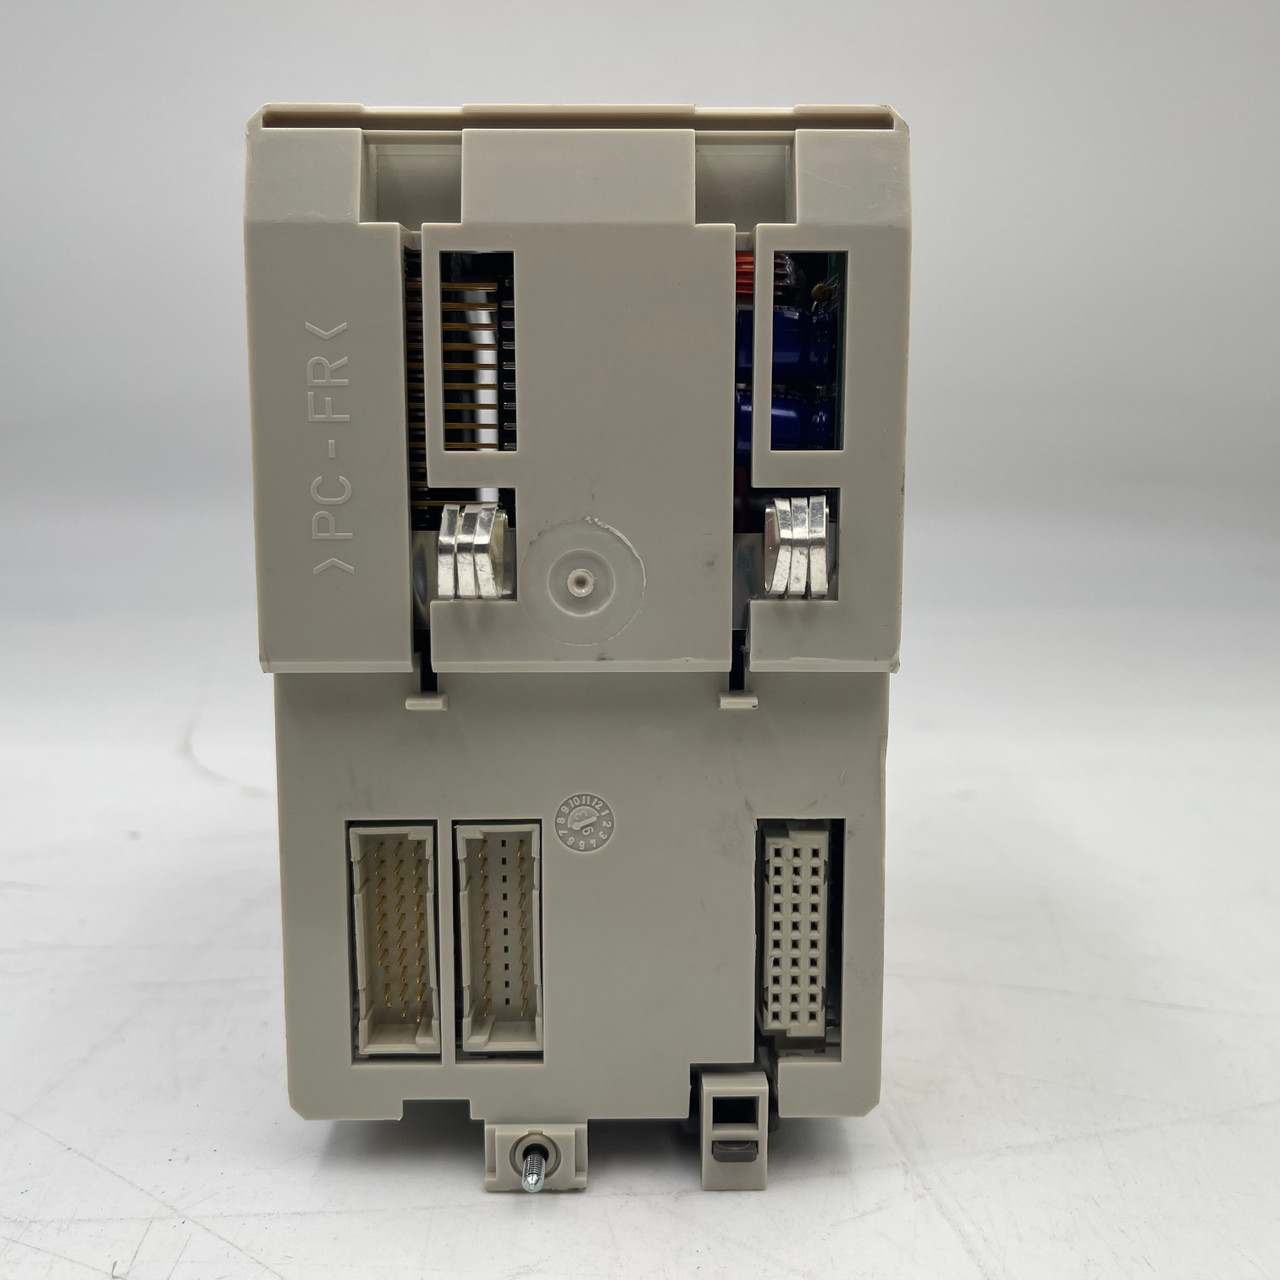 SCHNEIDER ELECTRIC PC-A984-131 MODICON 4K MEMORY 185 BASE COMPACT CPU MODULE